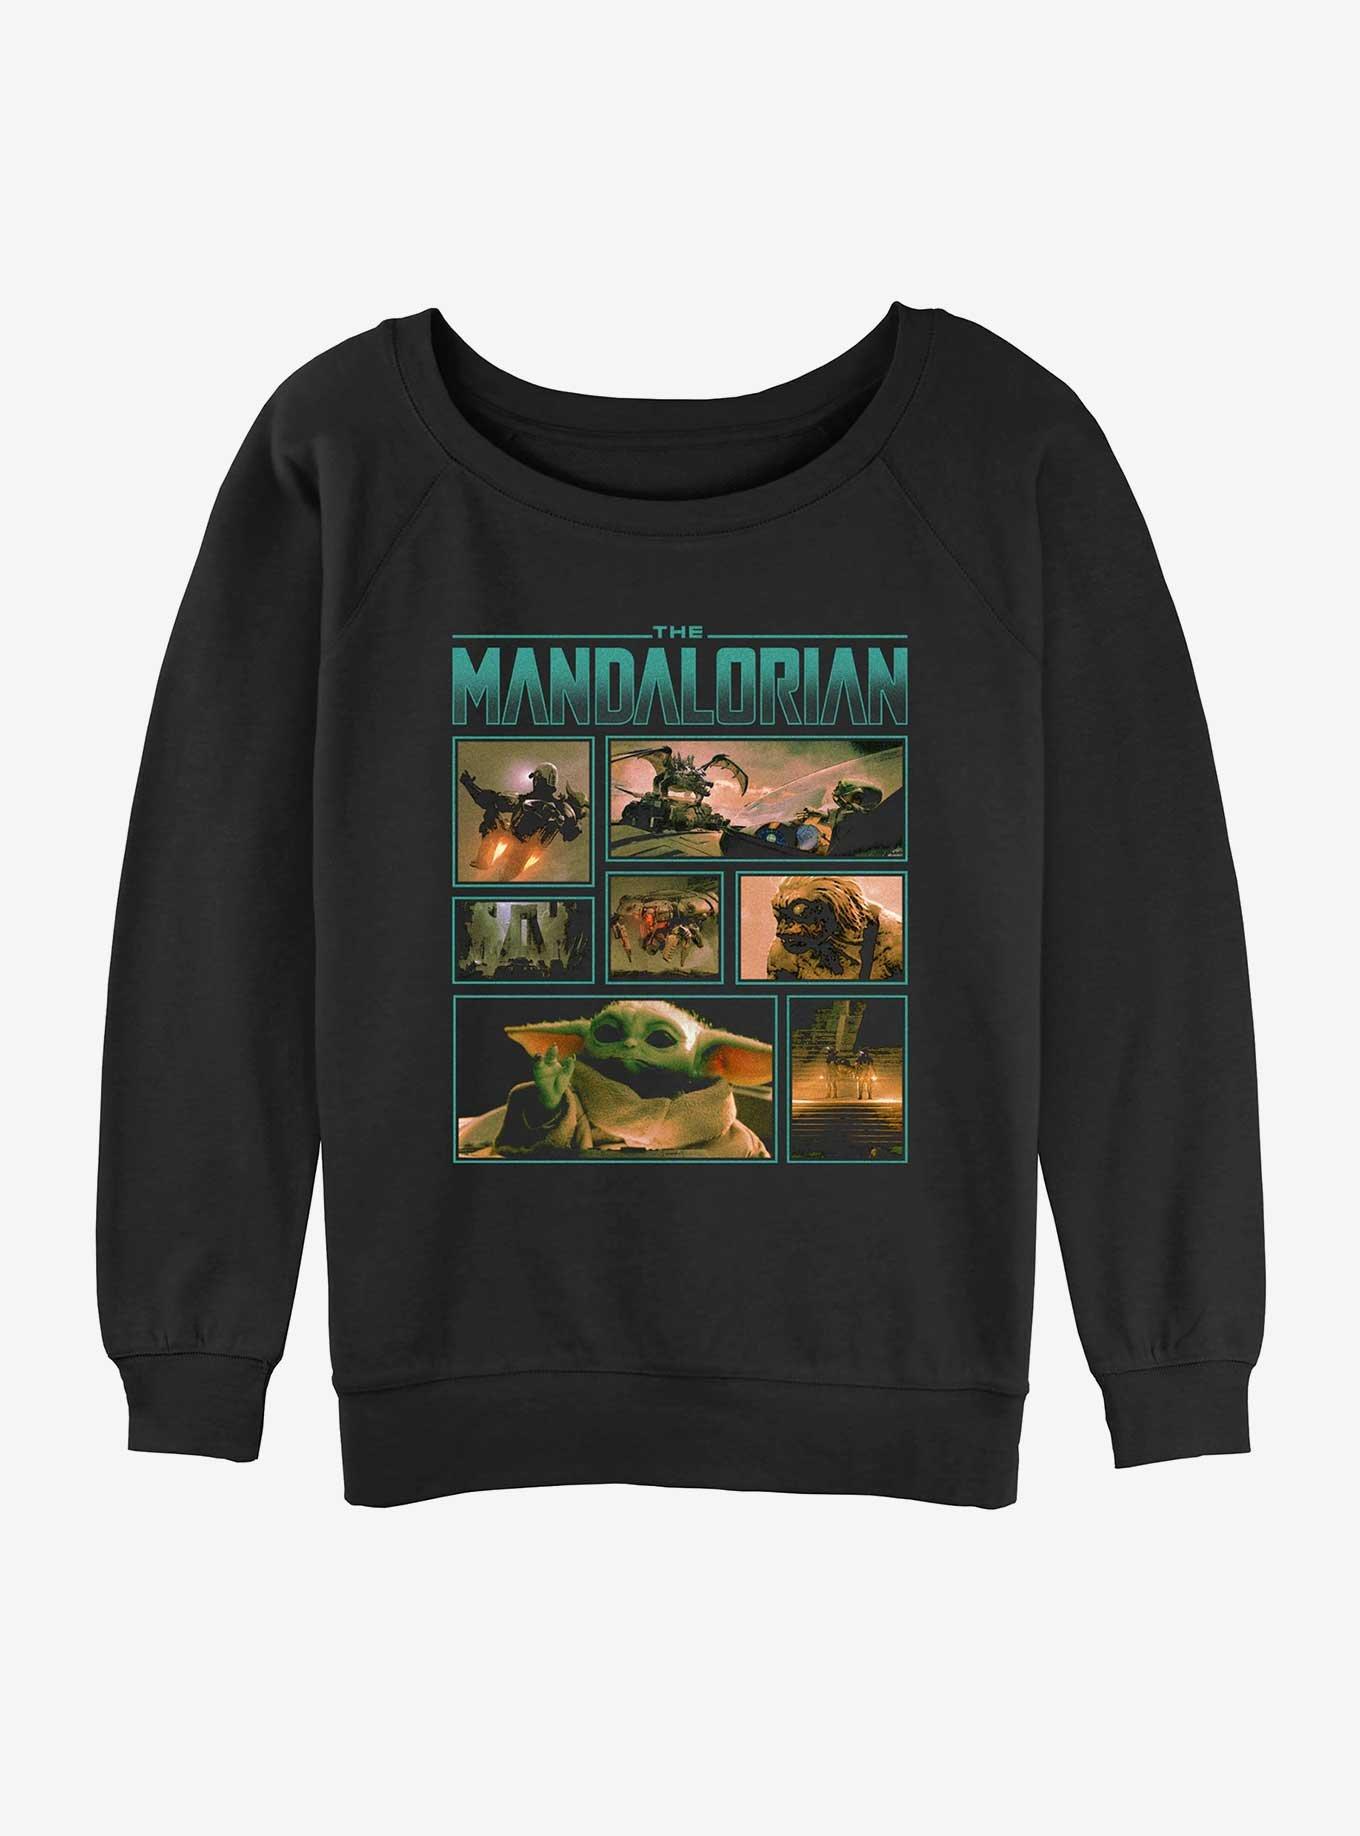 Star Wars The Mandalorian Adventures Through Mines of Mandalore Slouchy Sweatshirt